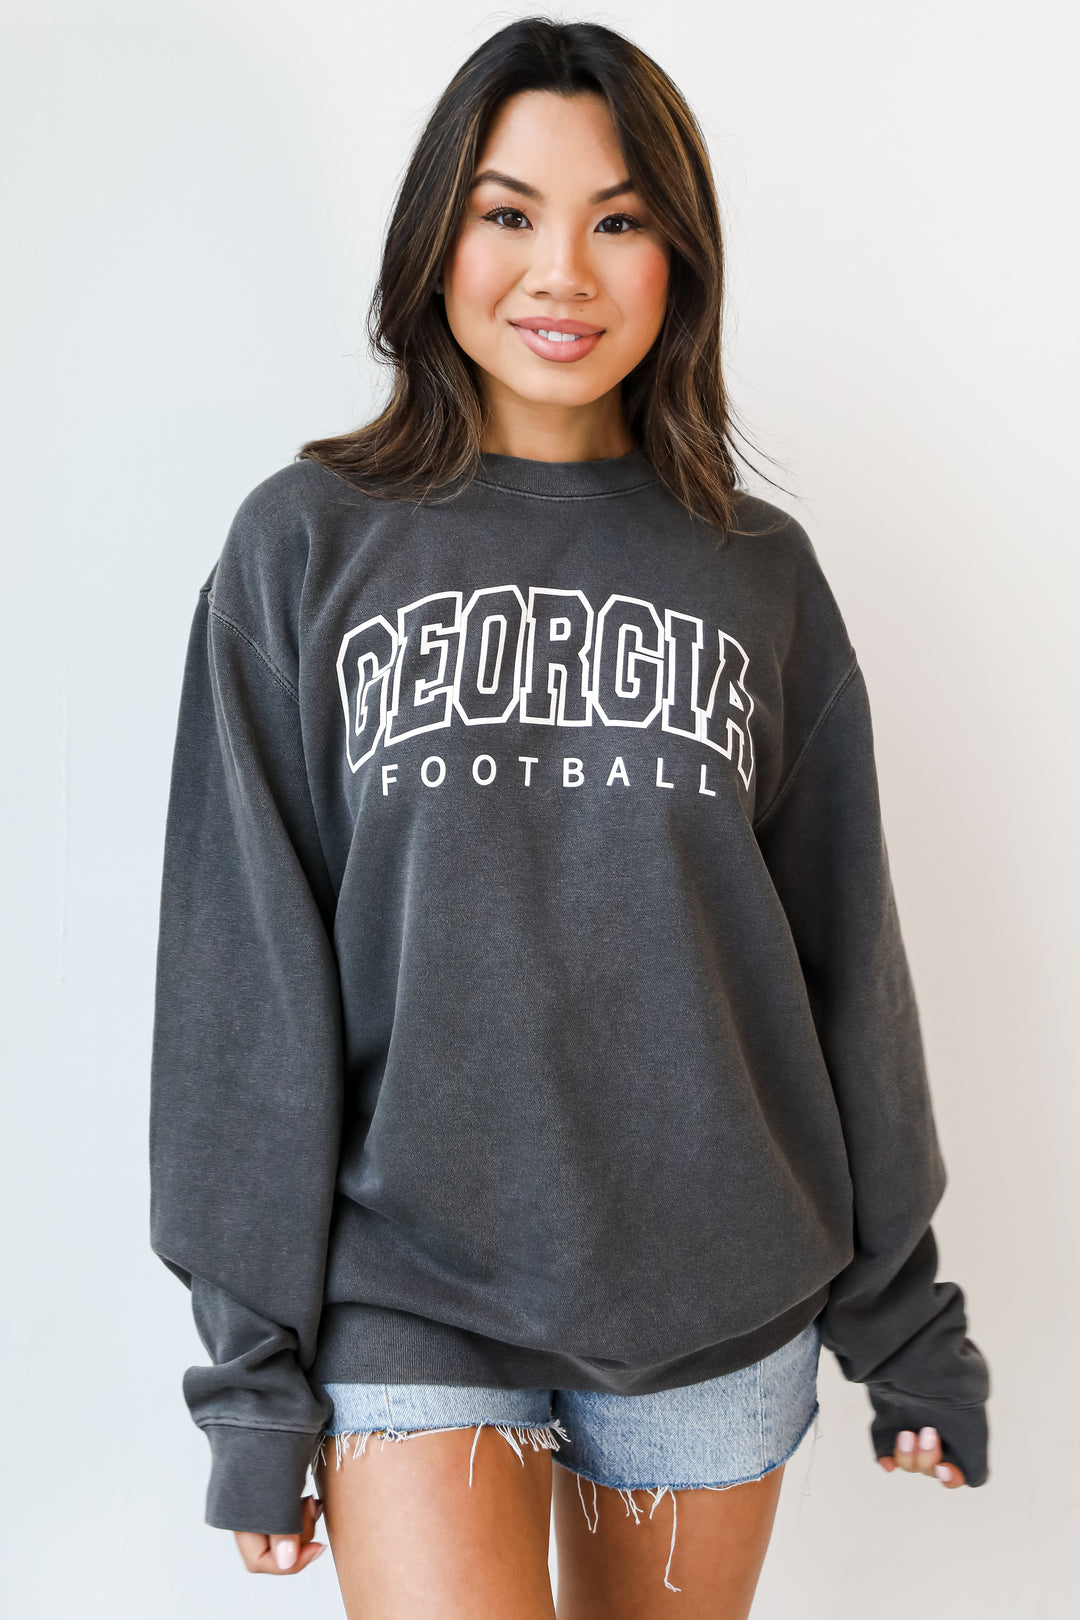 Black Georgia Football Block Letter Sweatshirt. Game Day Sweatshirt Outfit. Graphic Sweatshirt. 